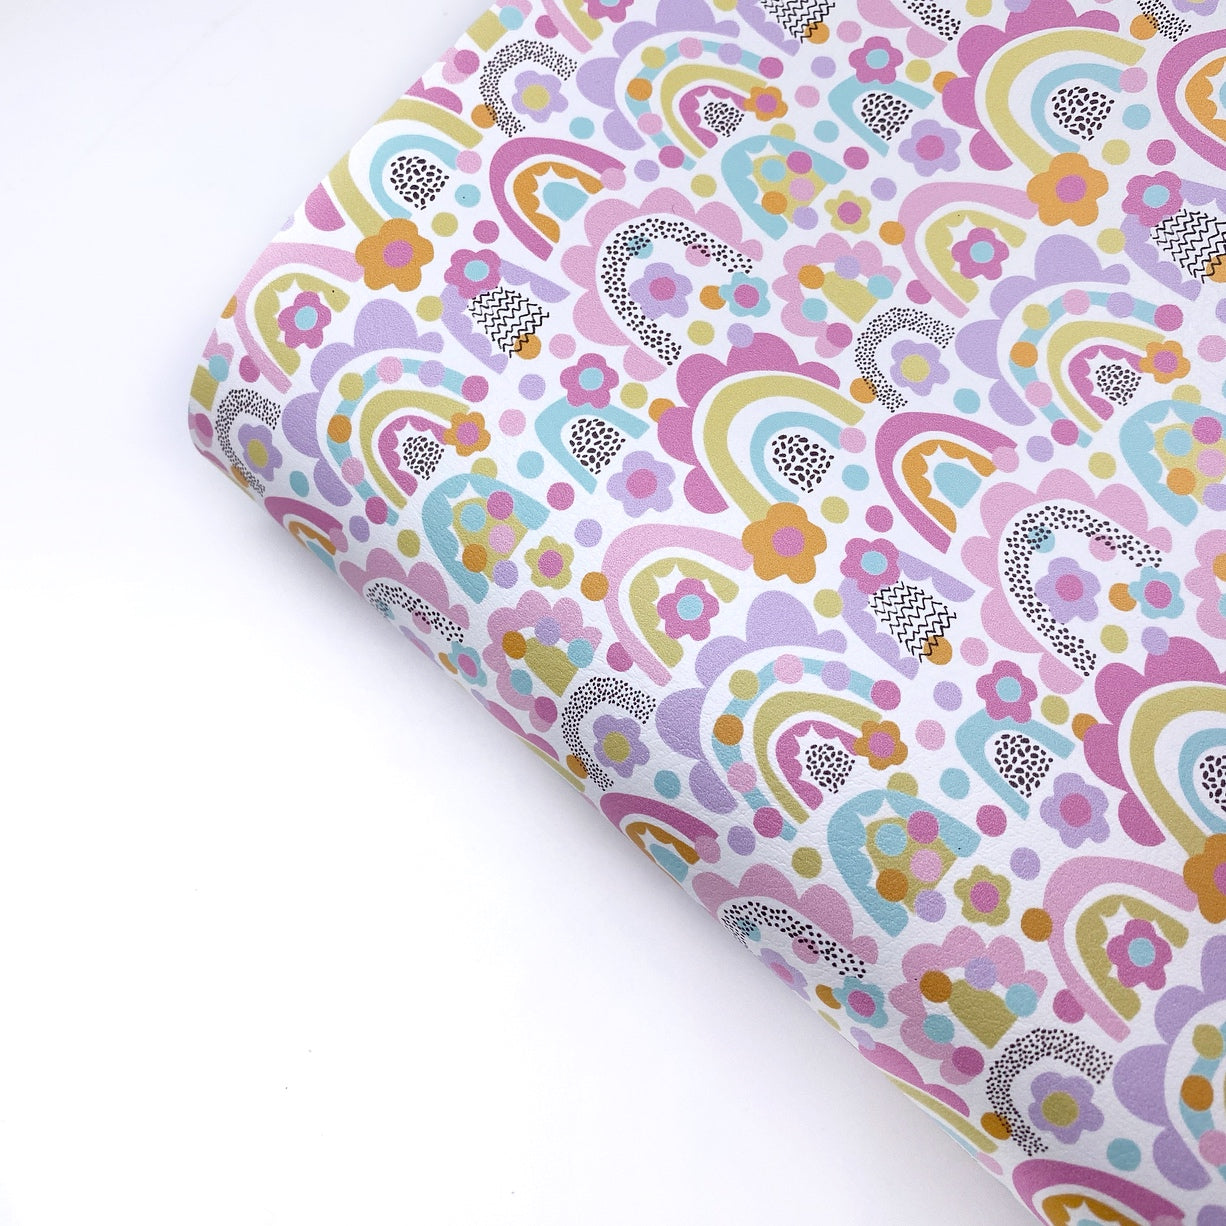 Flower Power Rainbows Premium Faux Leather Fabric Sheets